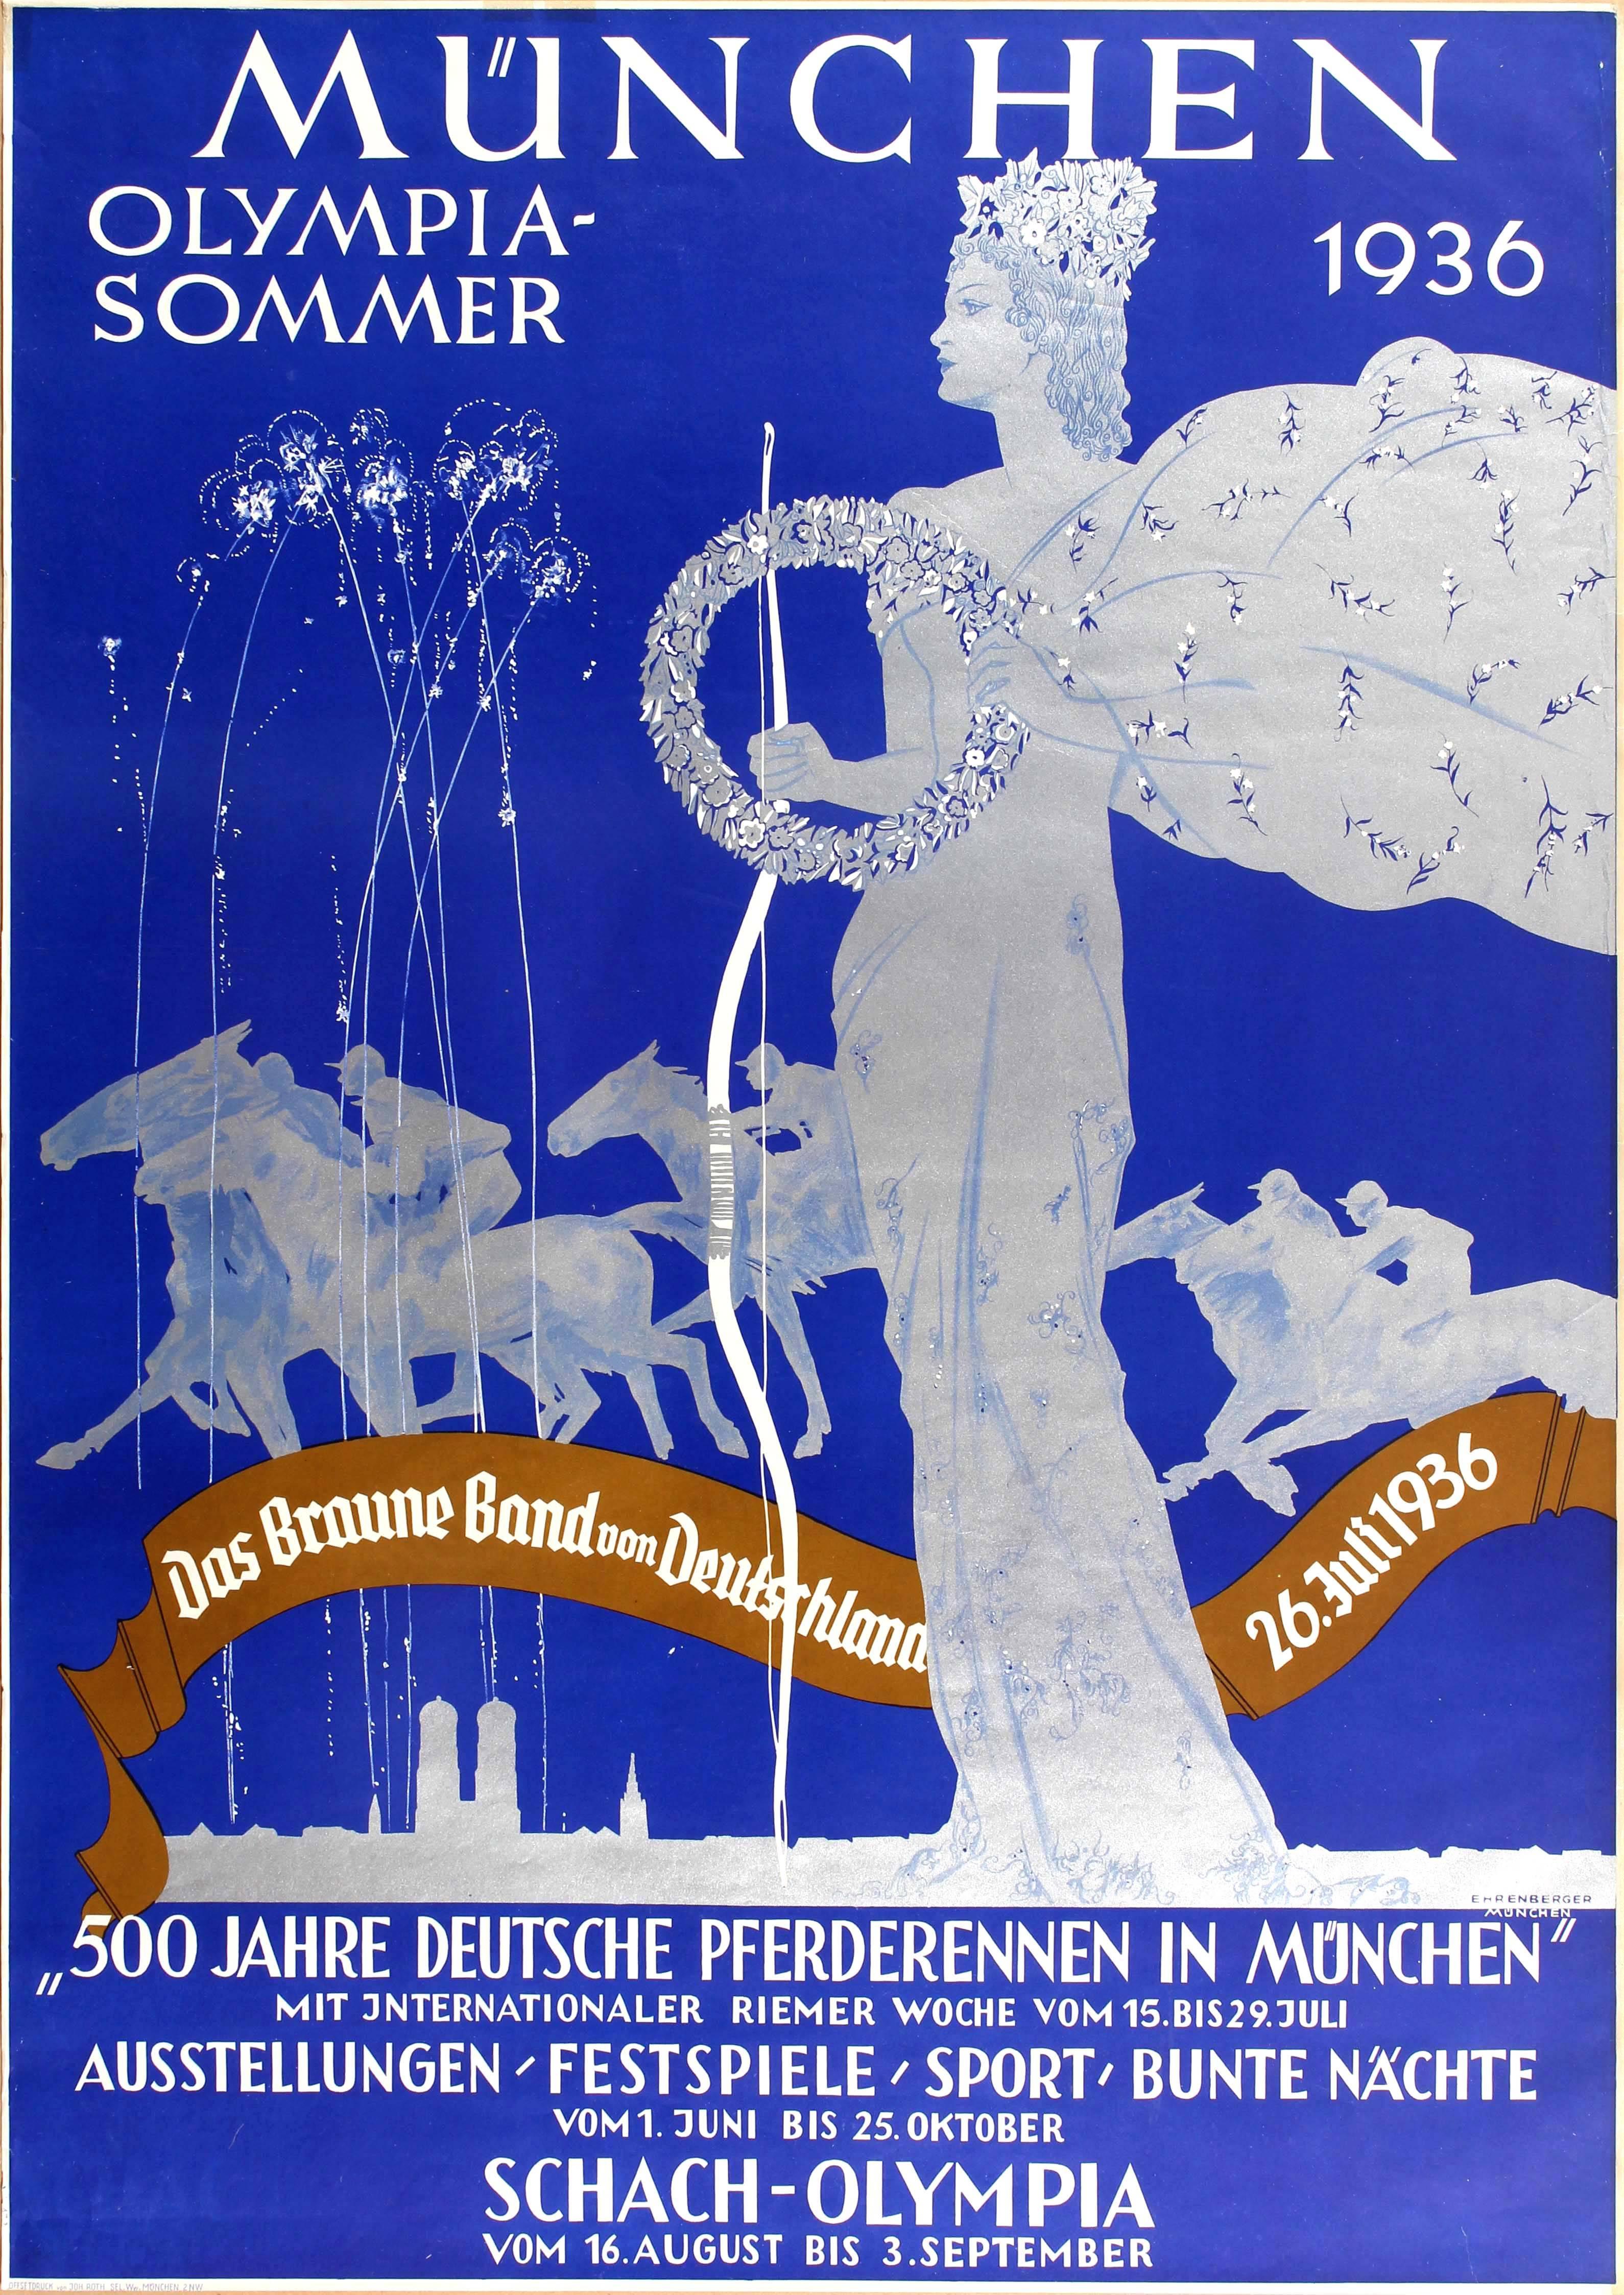 Ludwig Lutz Ehrenberger Print - Original Vintage Munich Olympic Sport Poster For Das Braune Band / Brown Ribbon